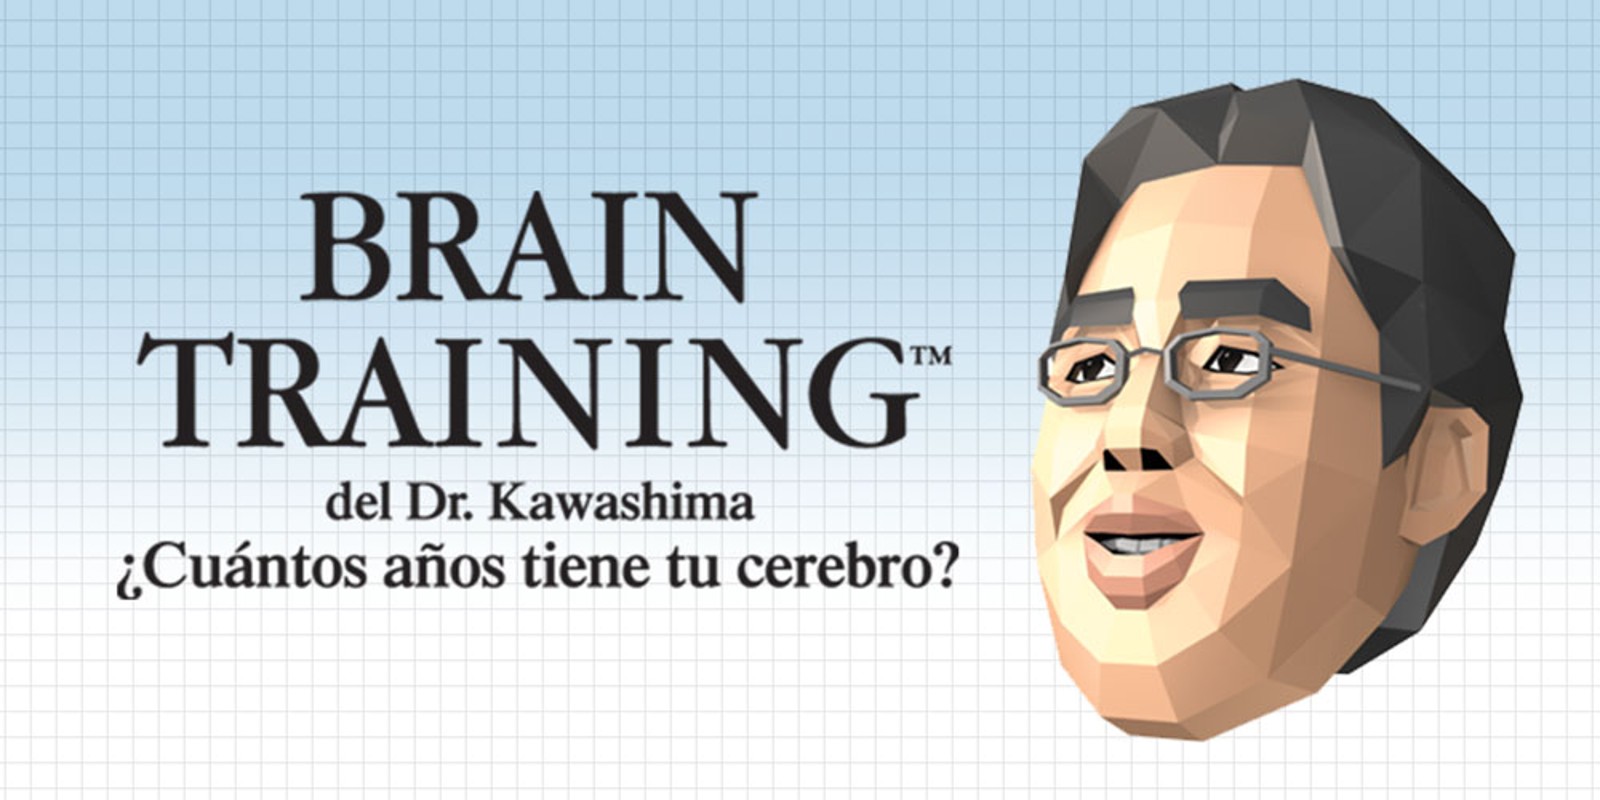 Brain Training del Dr. Kawashima switch